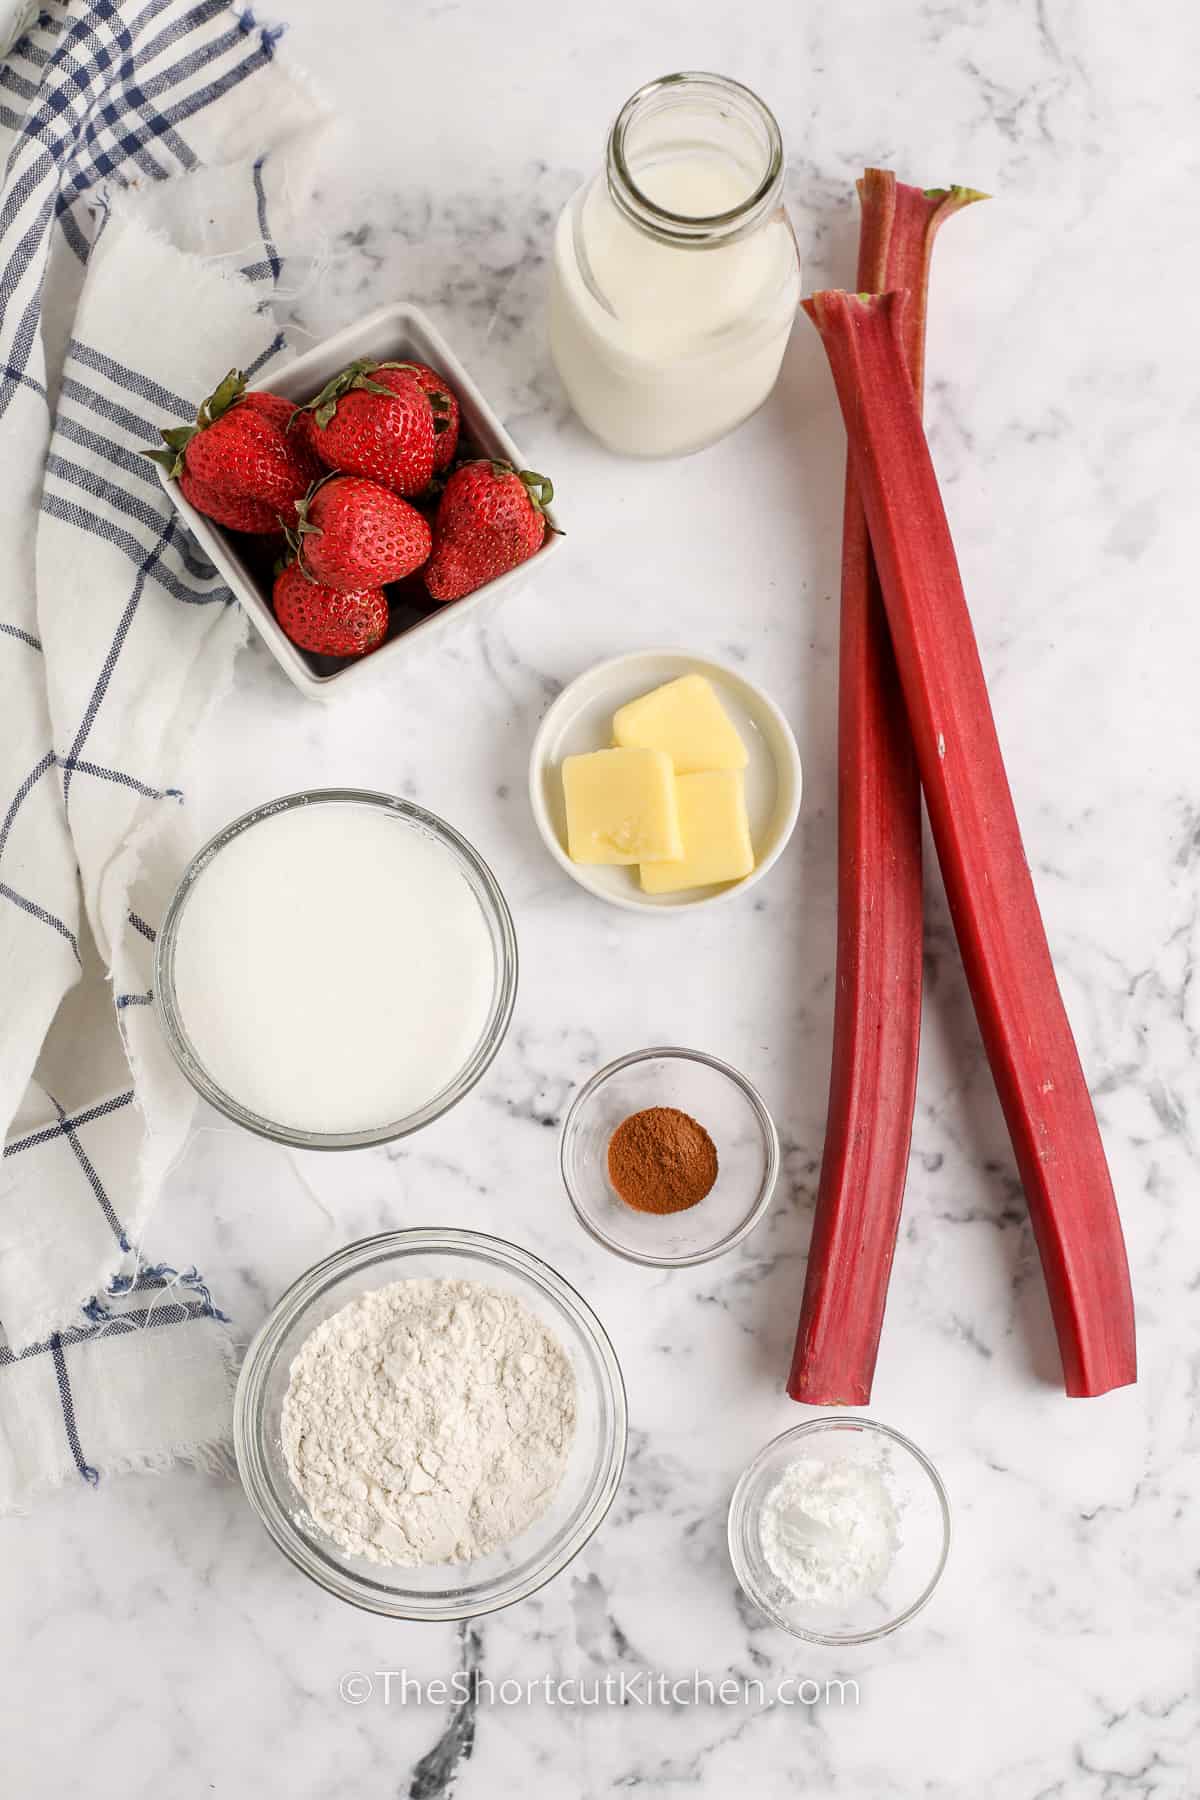 ingredients to make Strawberry Rhubarb Cobbler